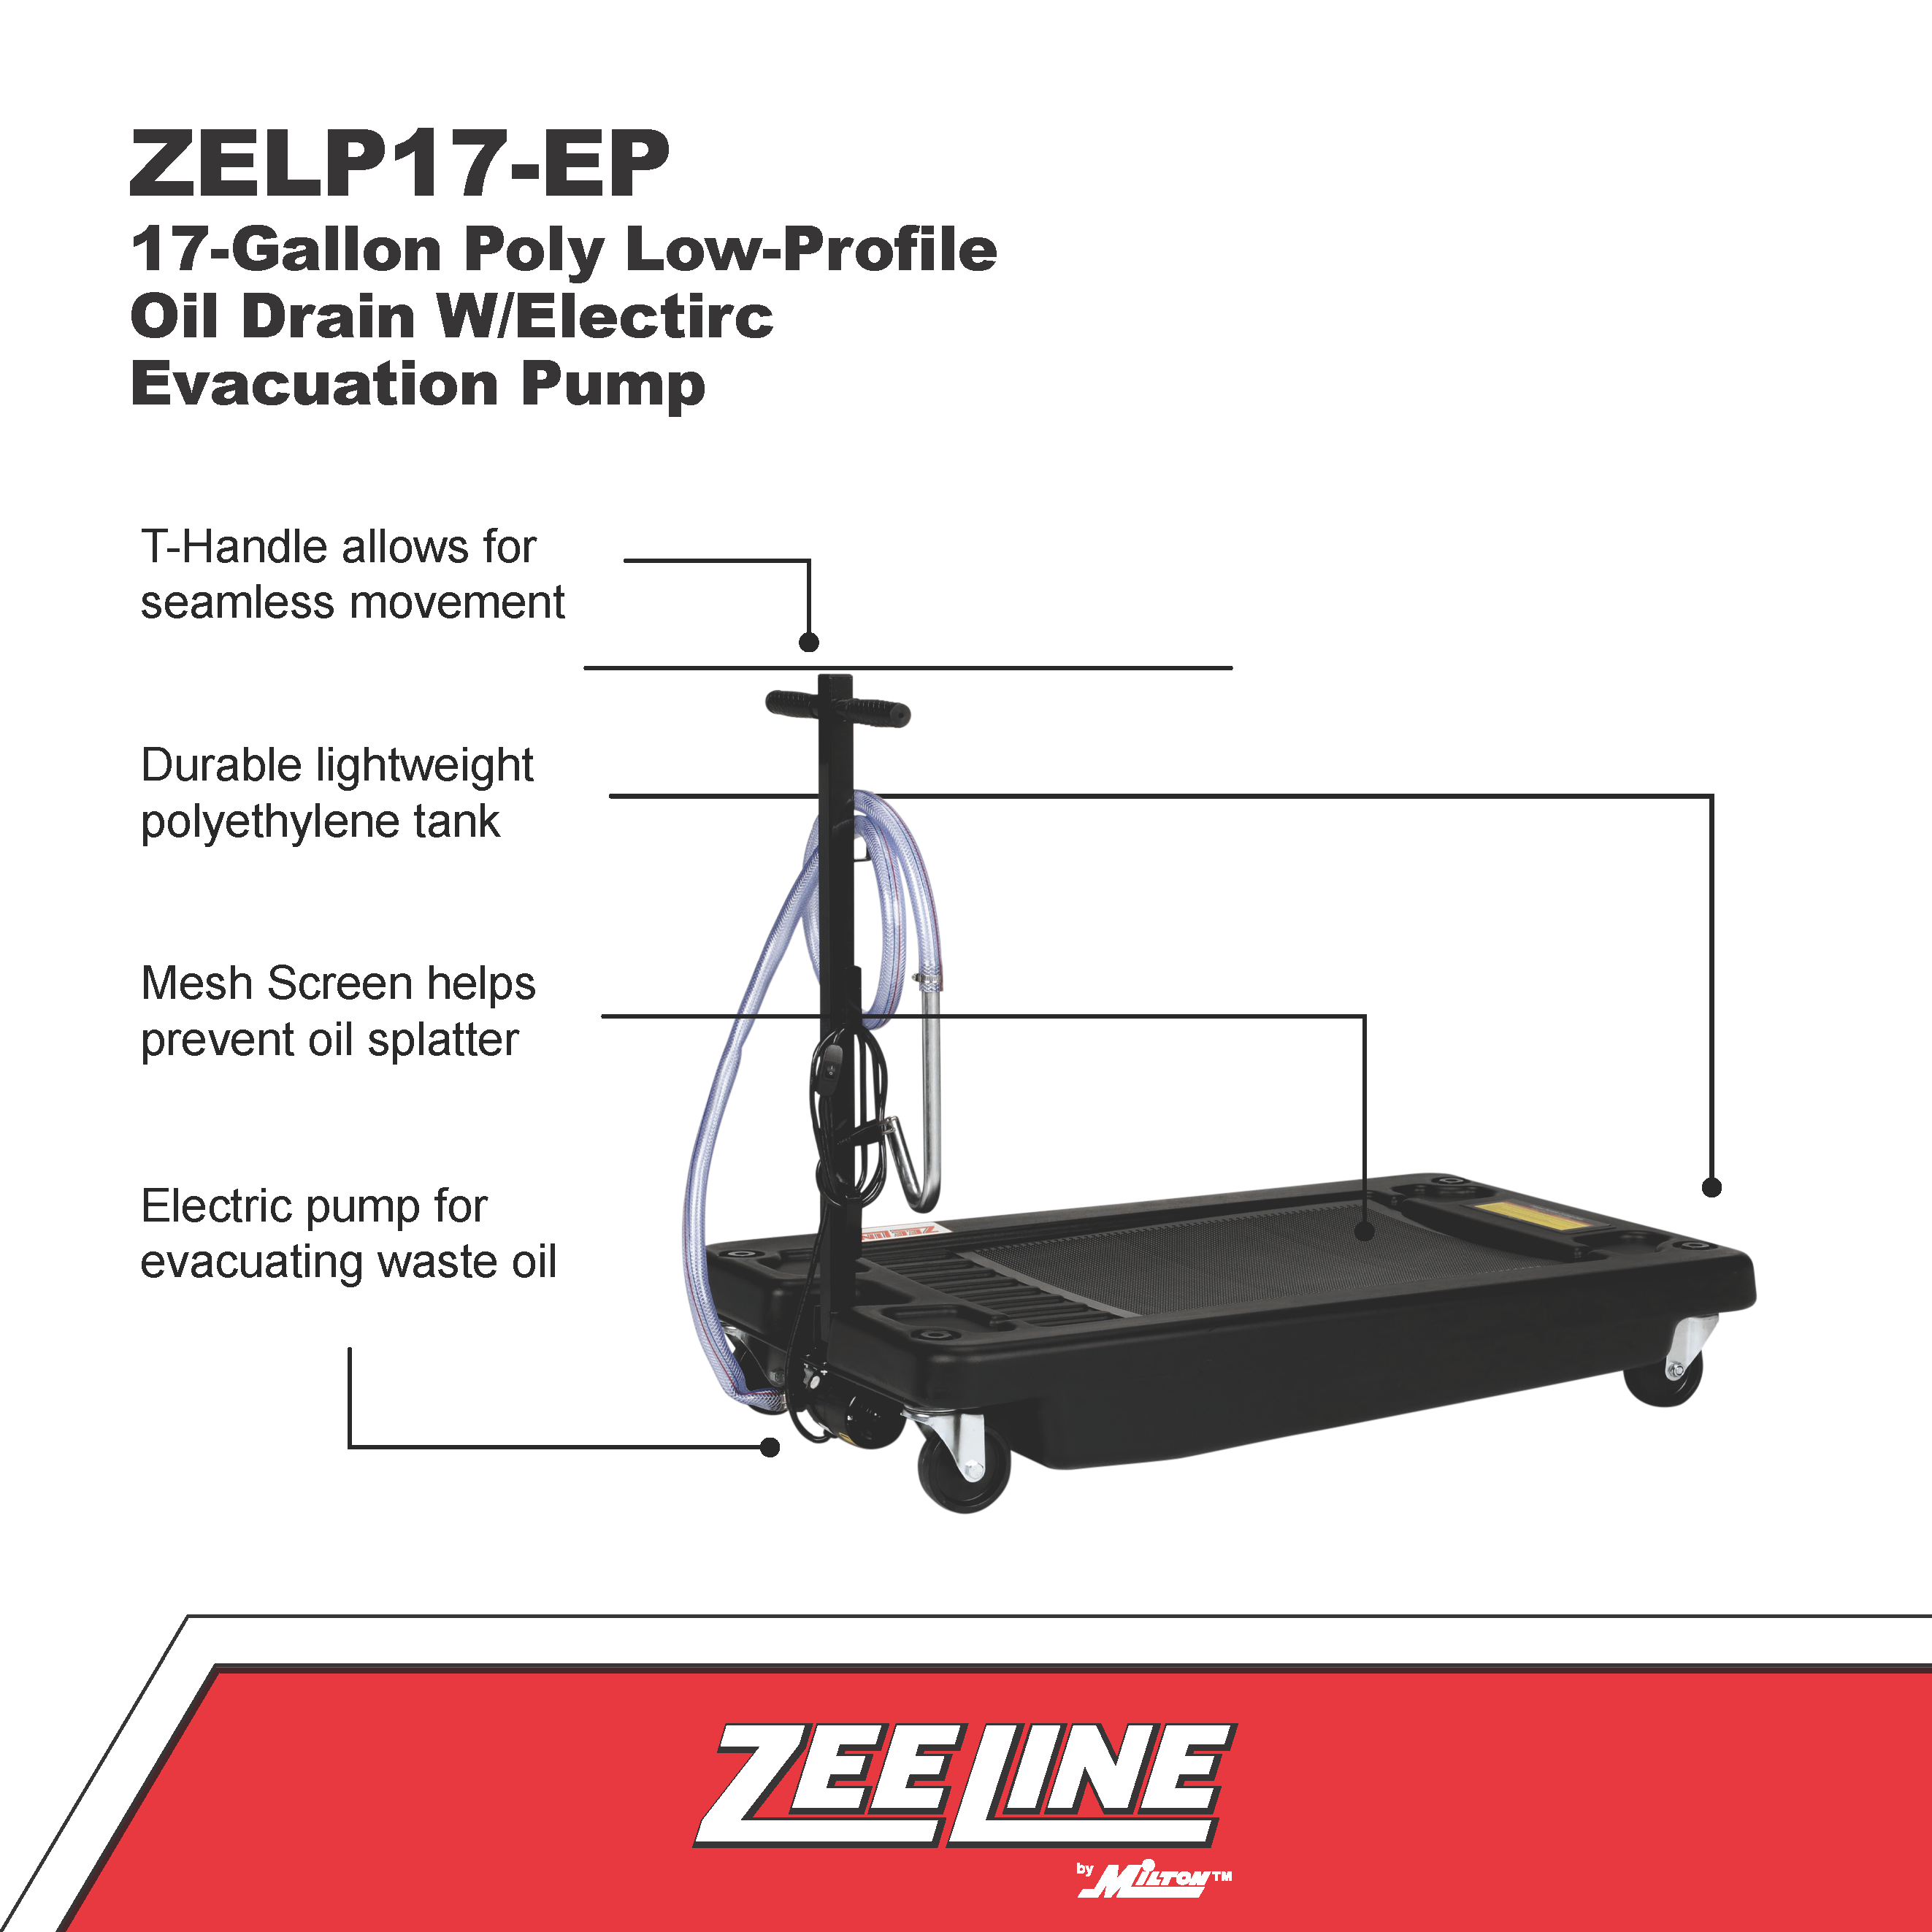 ZELP17-EP – 17-Gallon Poly Low-Profile Oil Drain w/electric evacuation pump